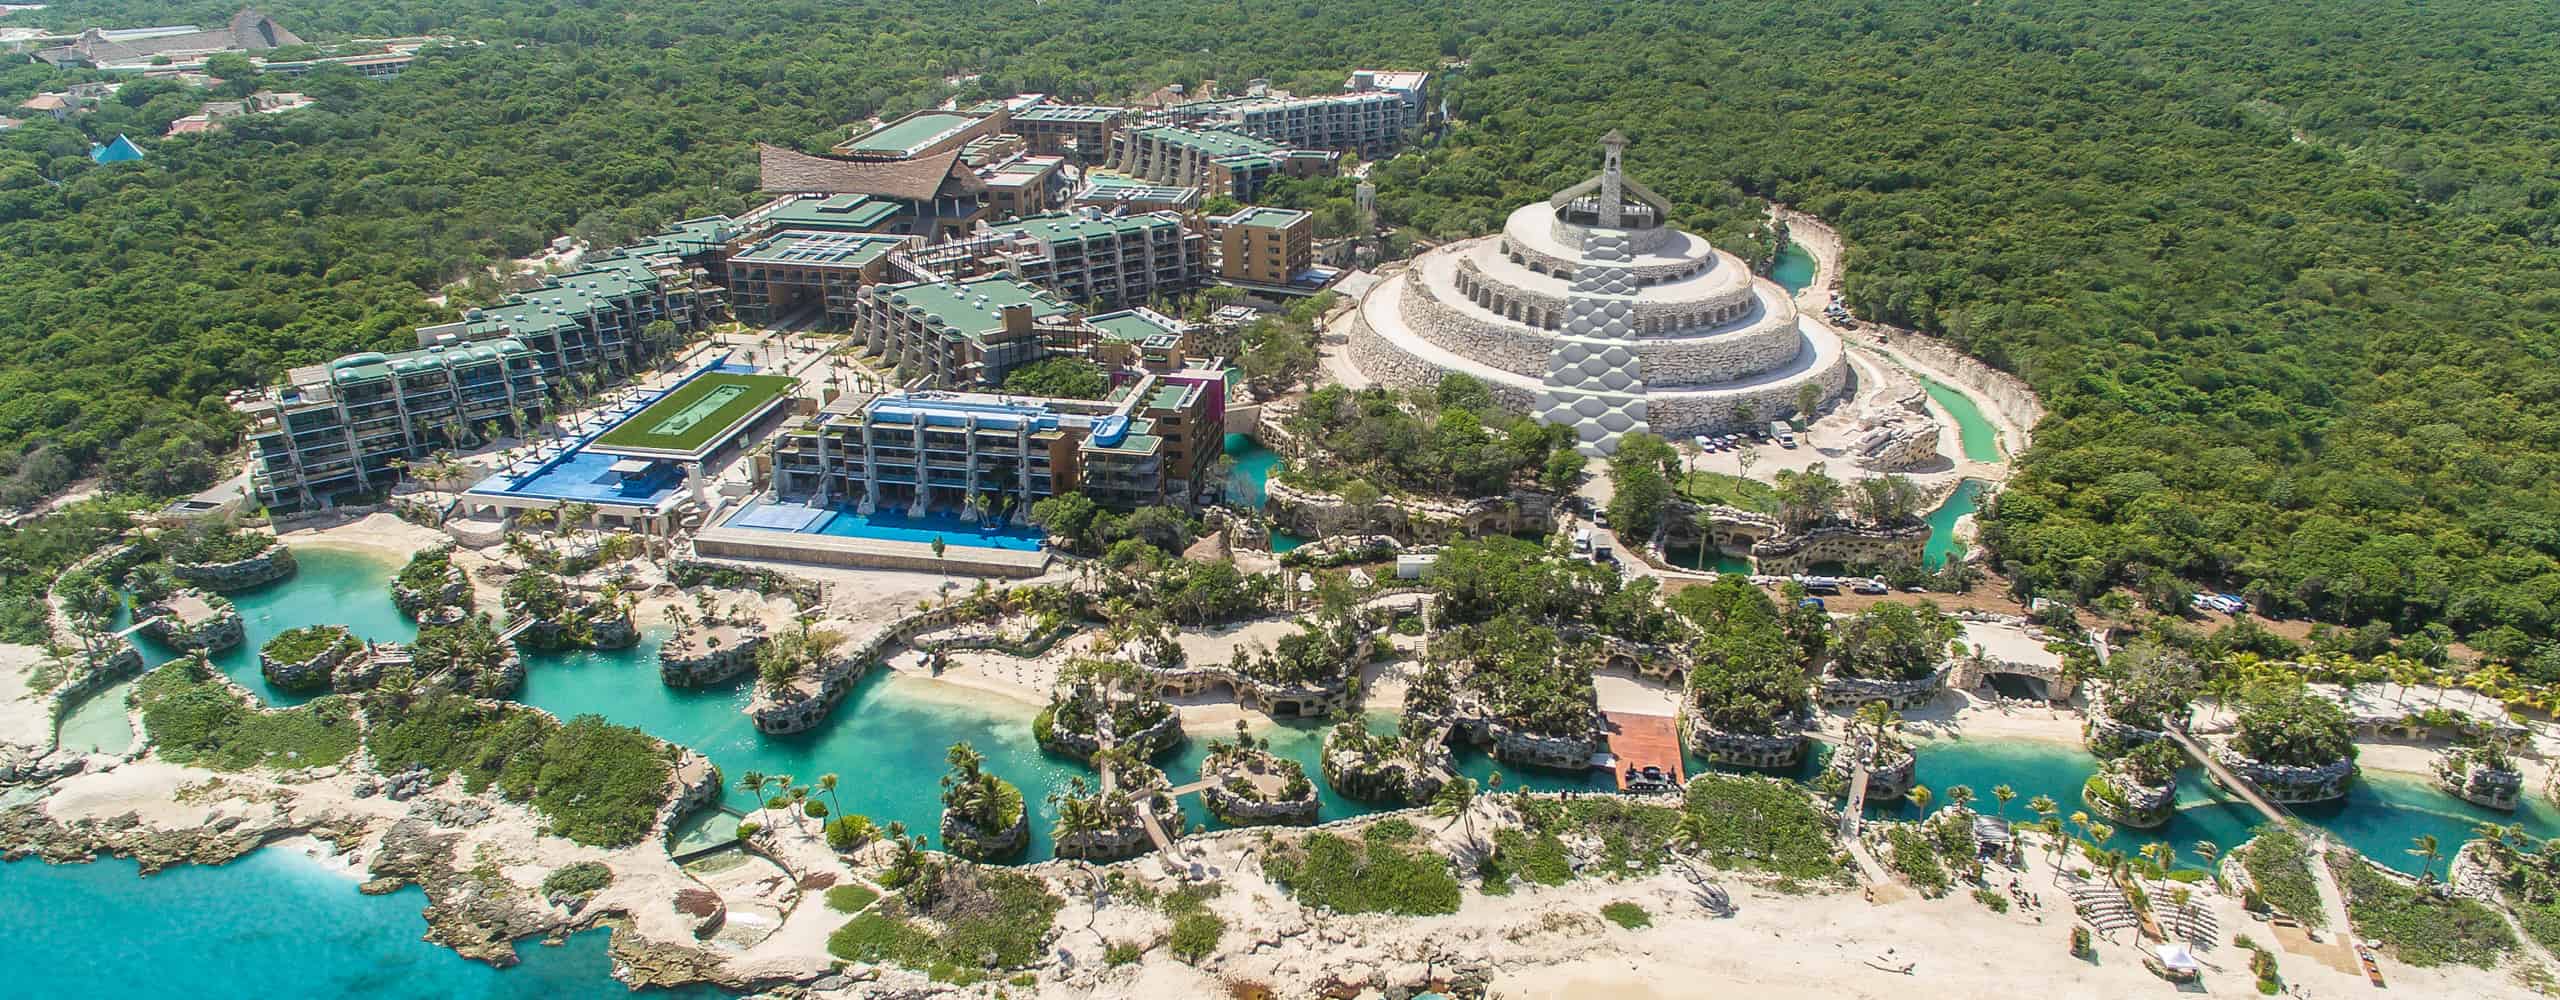 Hotel Xcaret Mexico, Riviera Maya